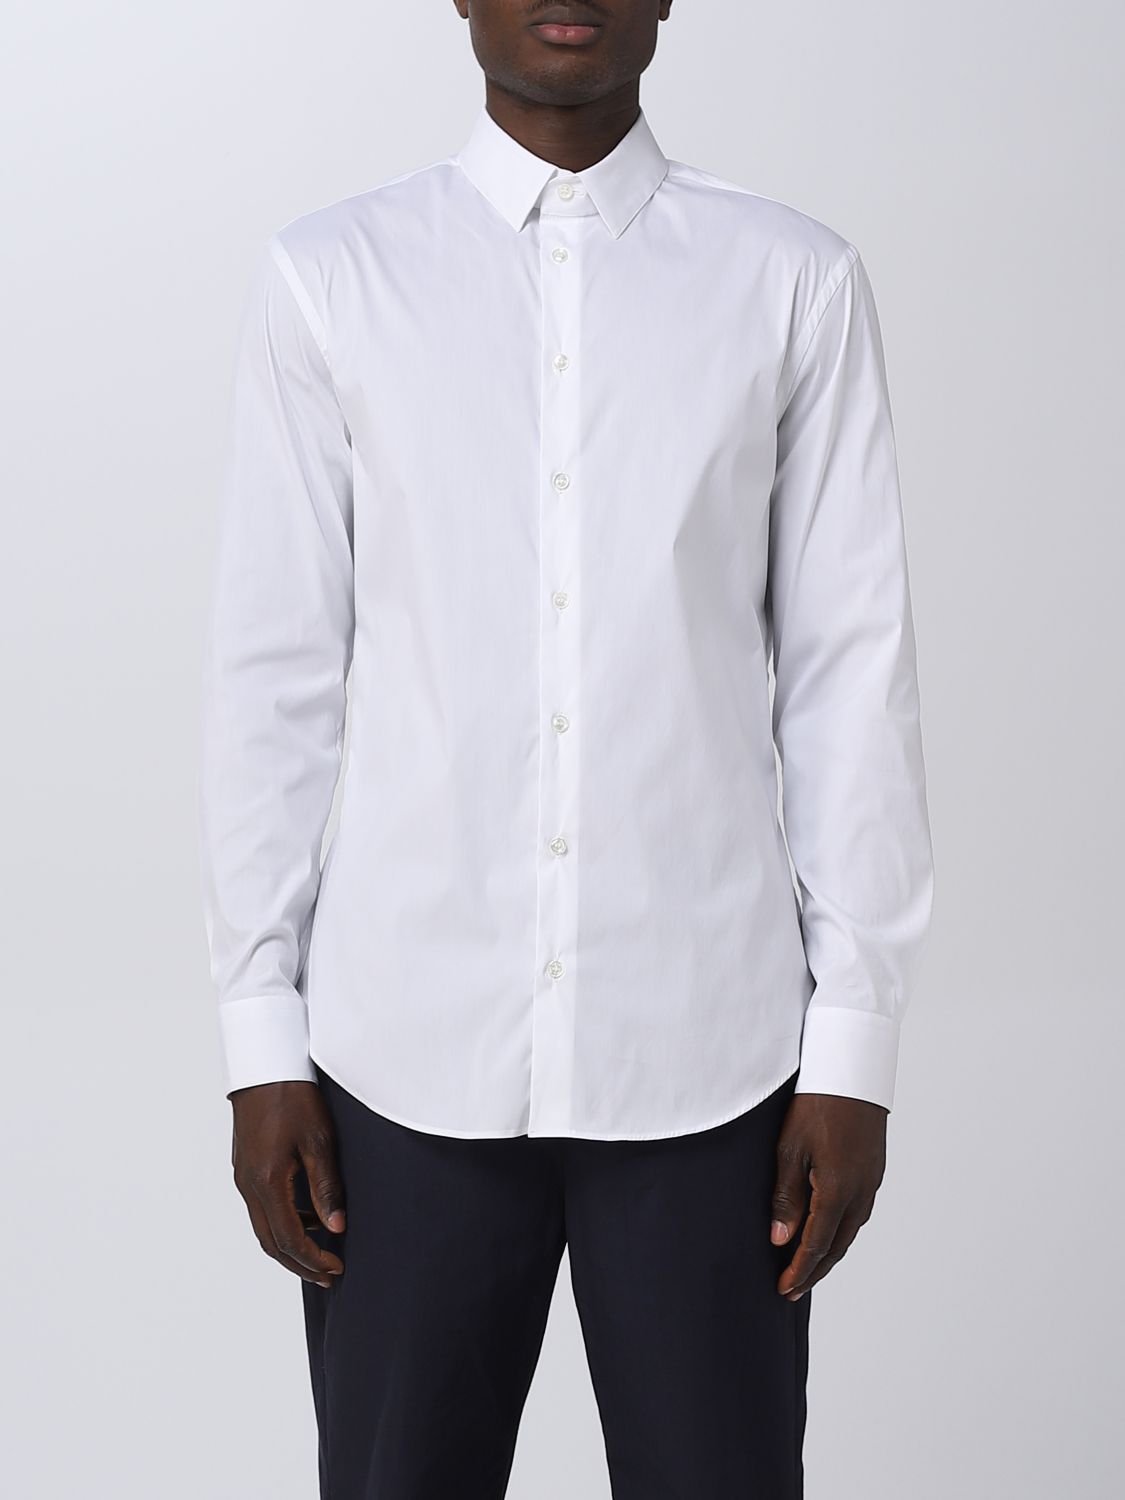 overdrijven Bedenken Haas GIORGIO ARMANI: shirt for man - White | Giorgio Armani shirt 8WGCCZ97TZ517  online on GIGLIO.COM